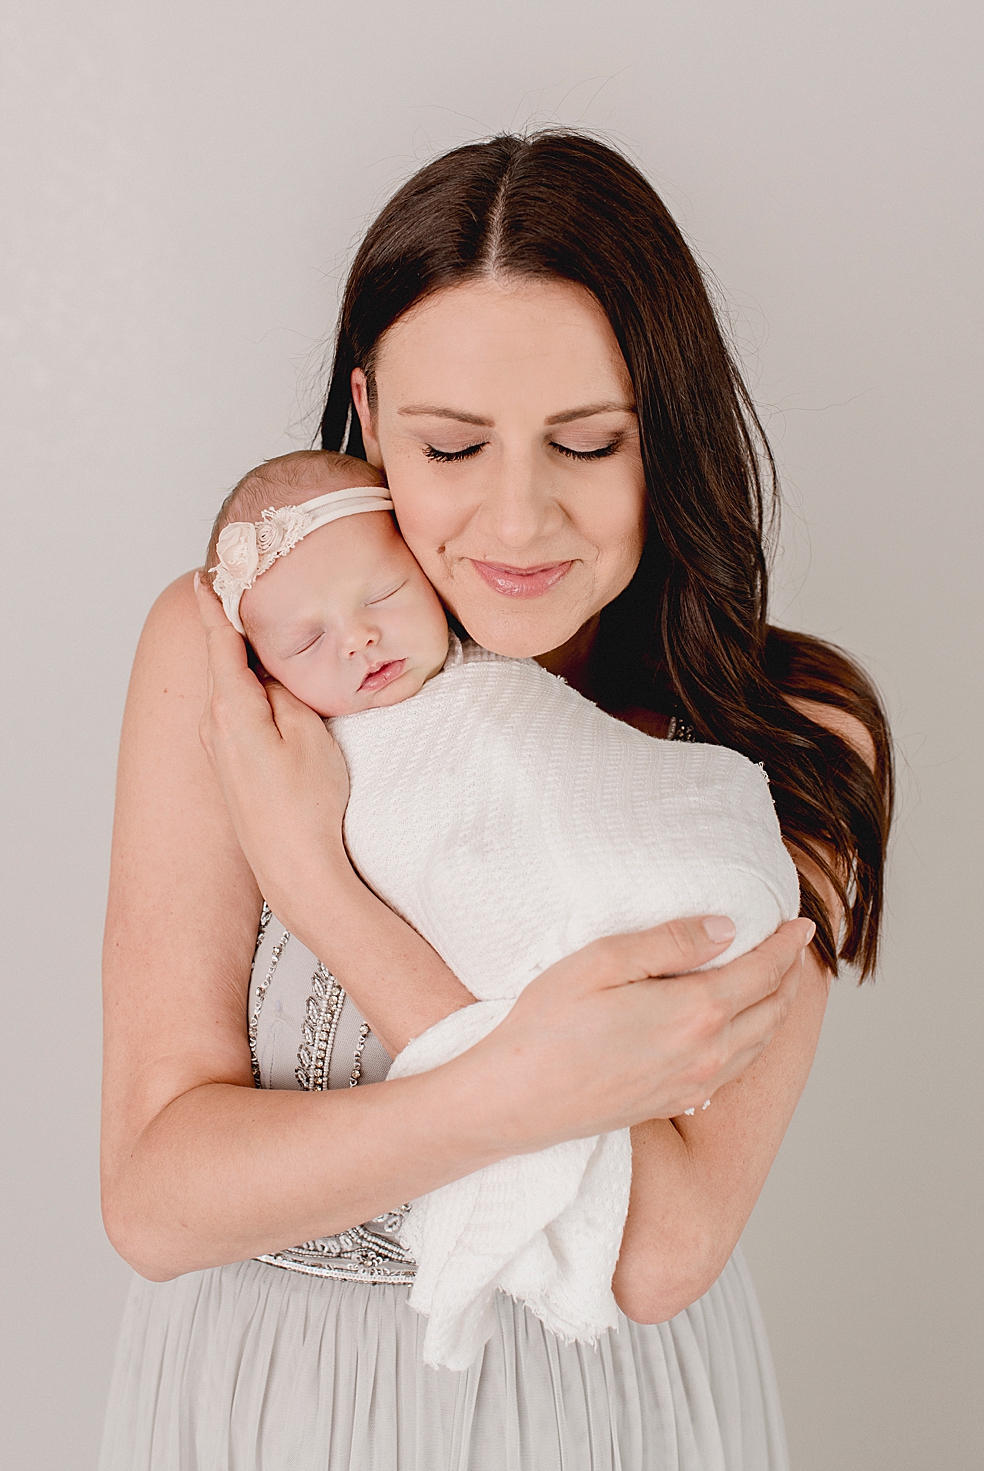 Mom snuggling newborn baby girl in headband | Photo by Jessica Lee Photography